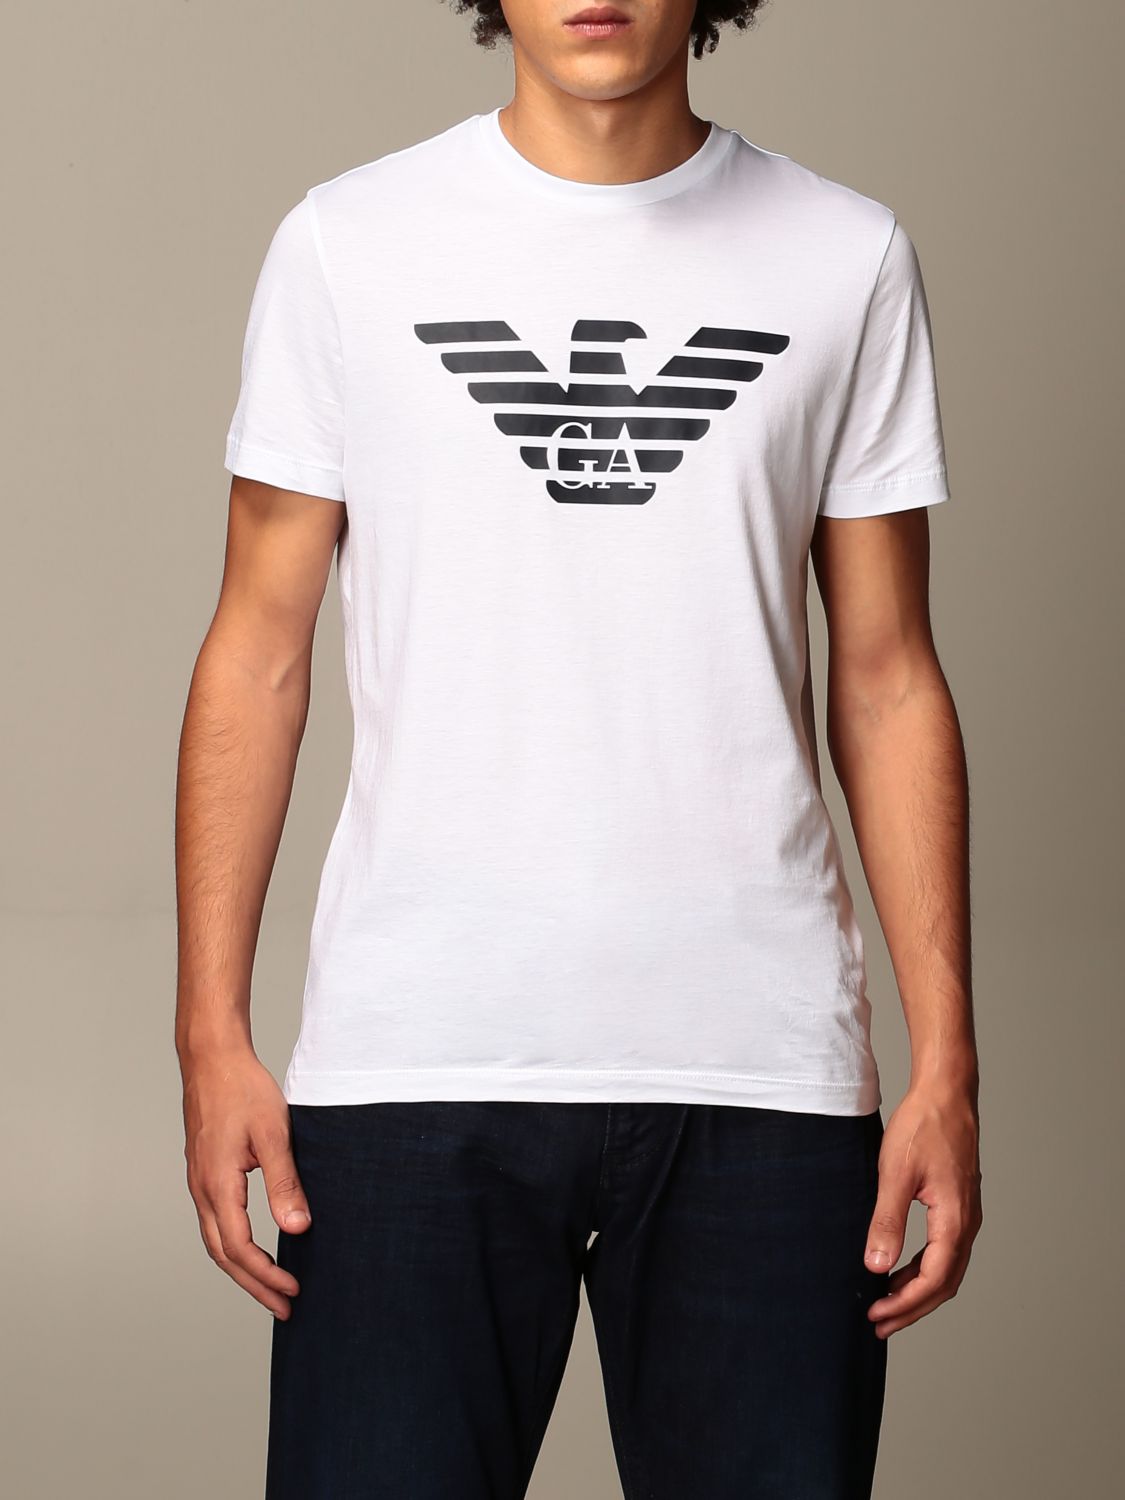 Emporio Armani Outlet: cotton t-shirt with logo - White | T-Shirt ...